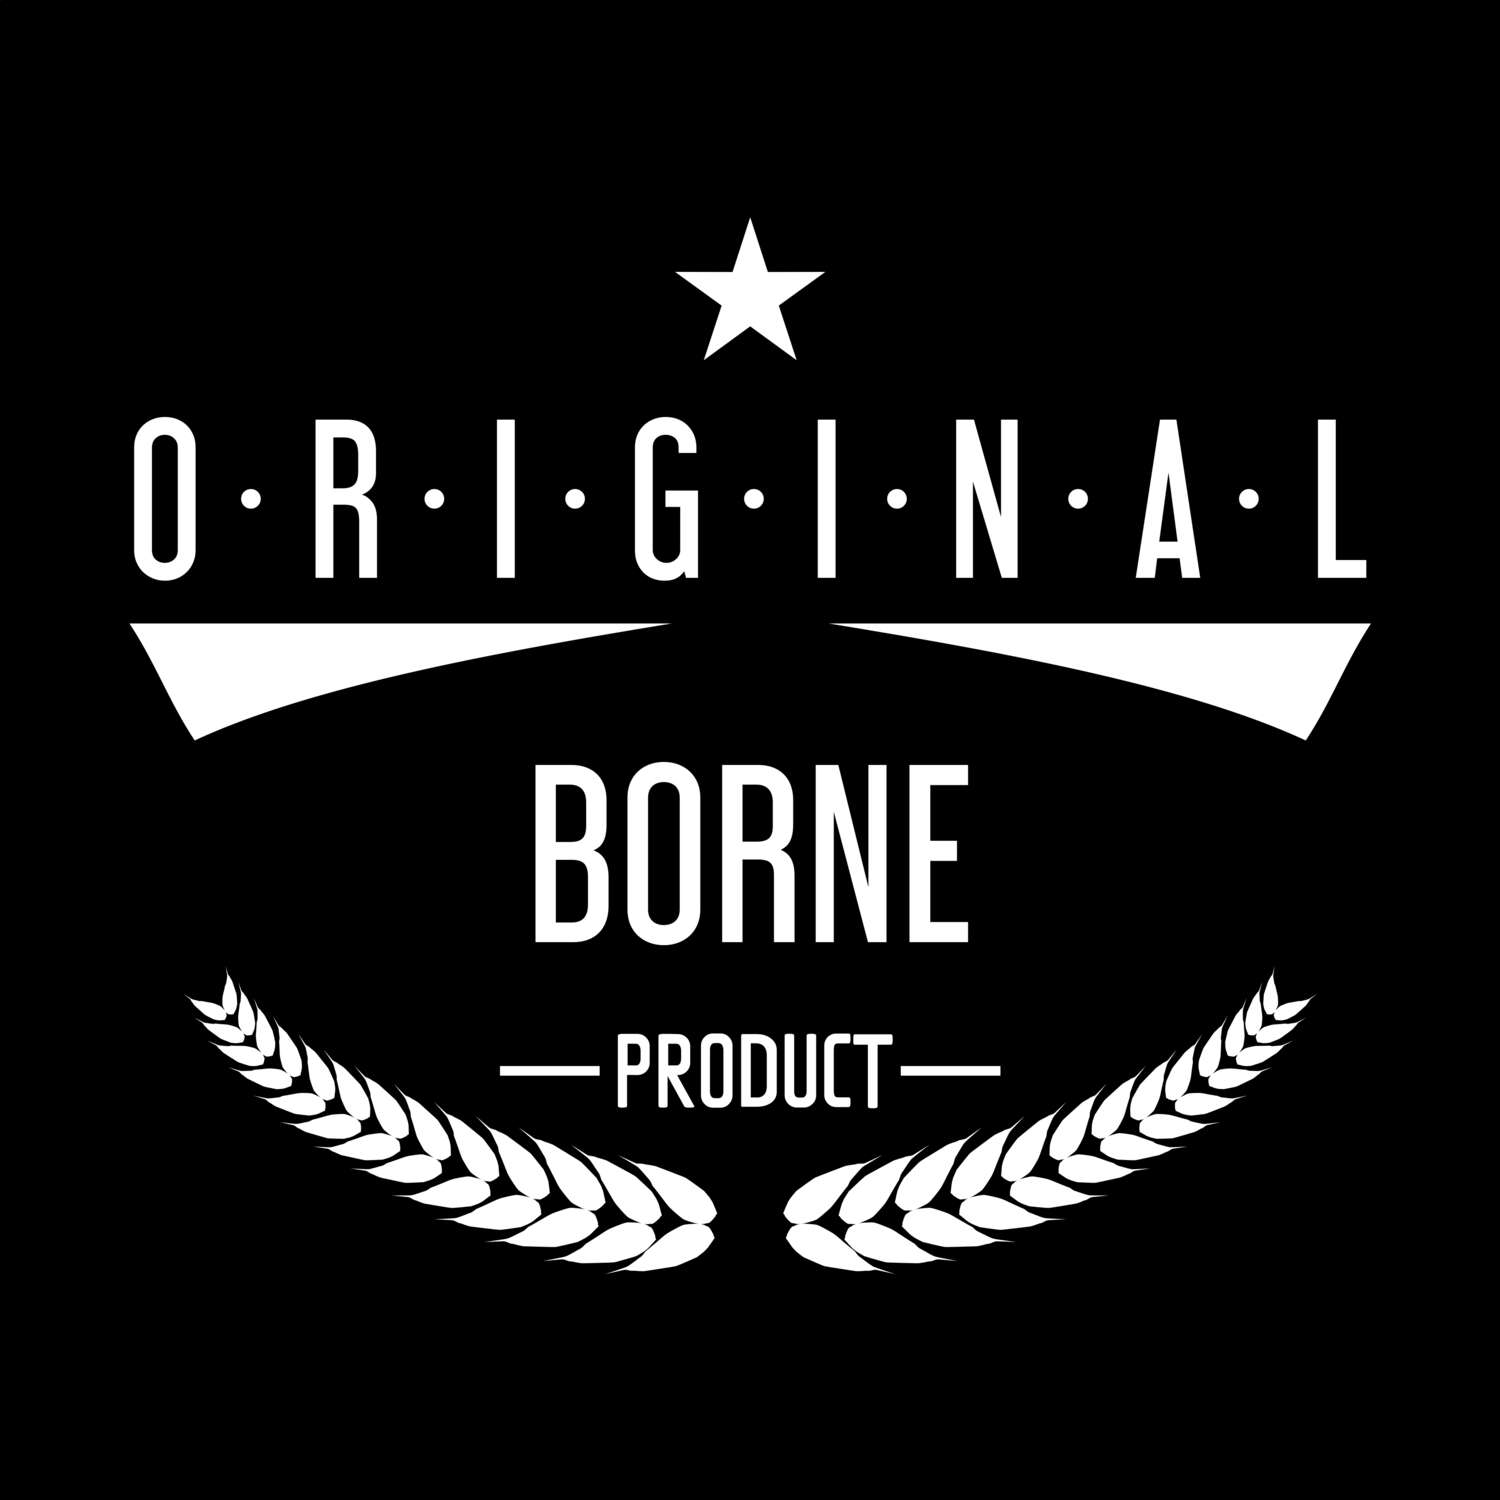 Borne T-Shirt »Original Product«